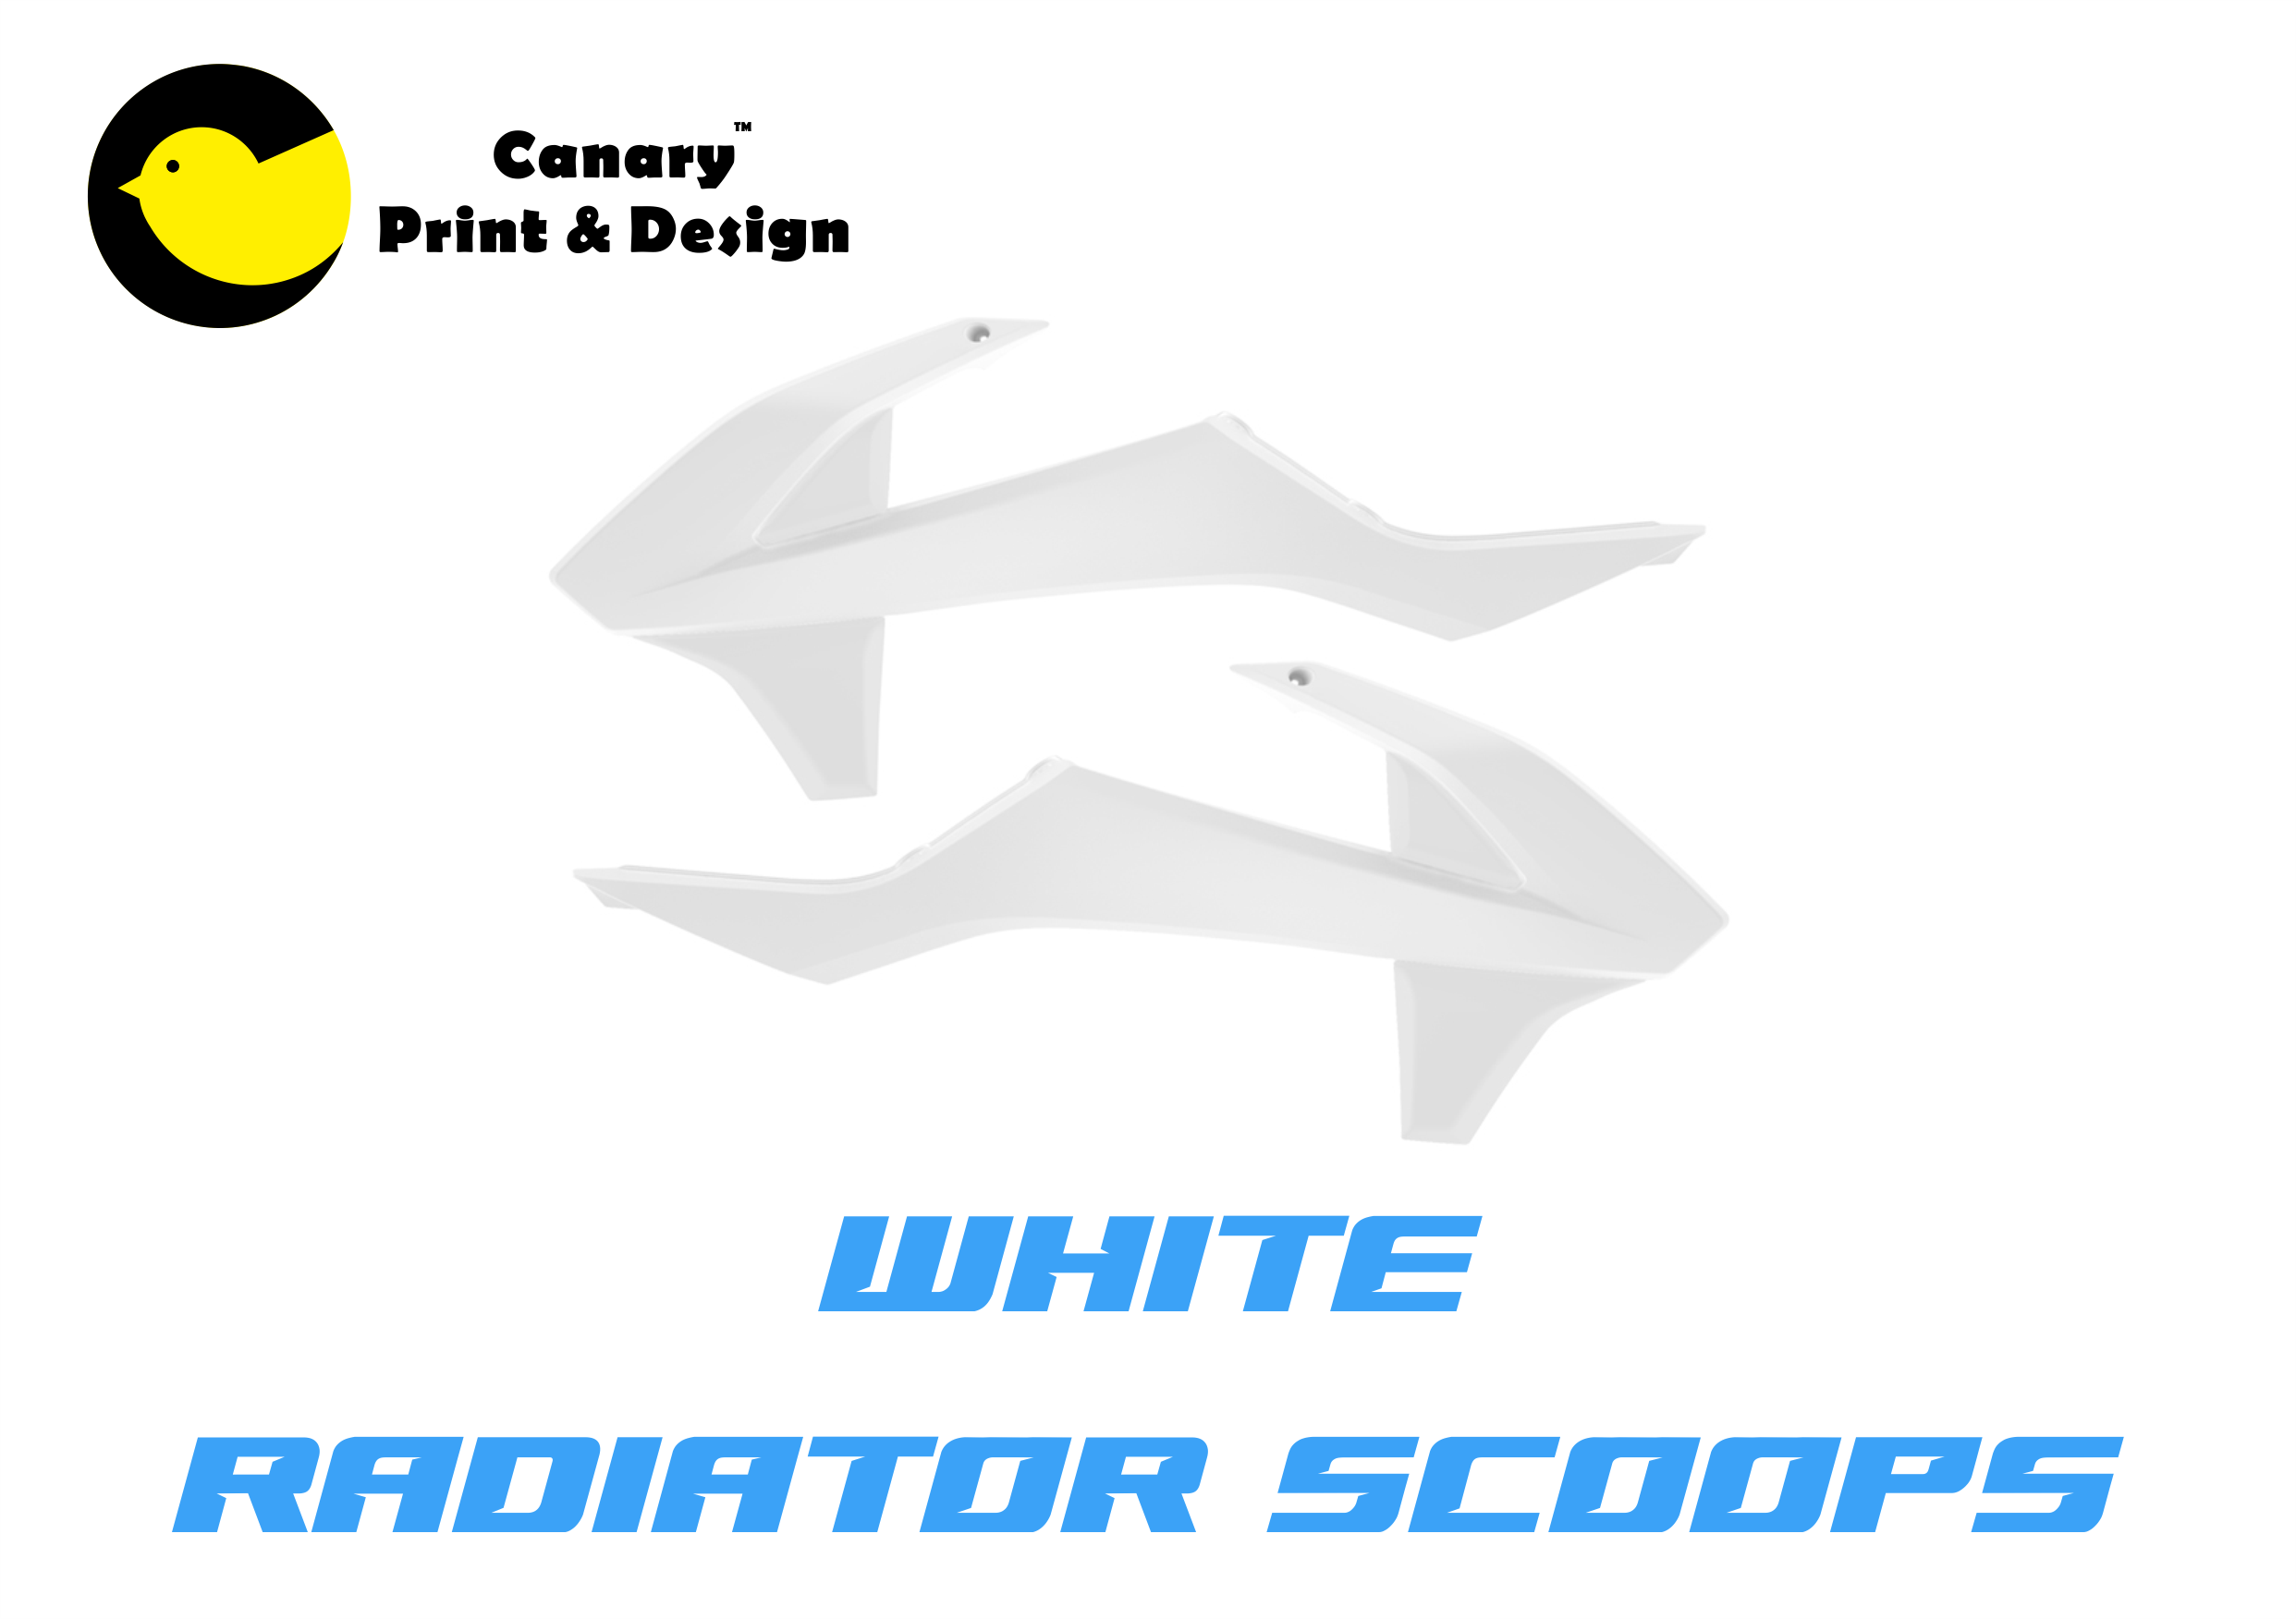 White Radiator Scoops